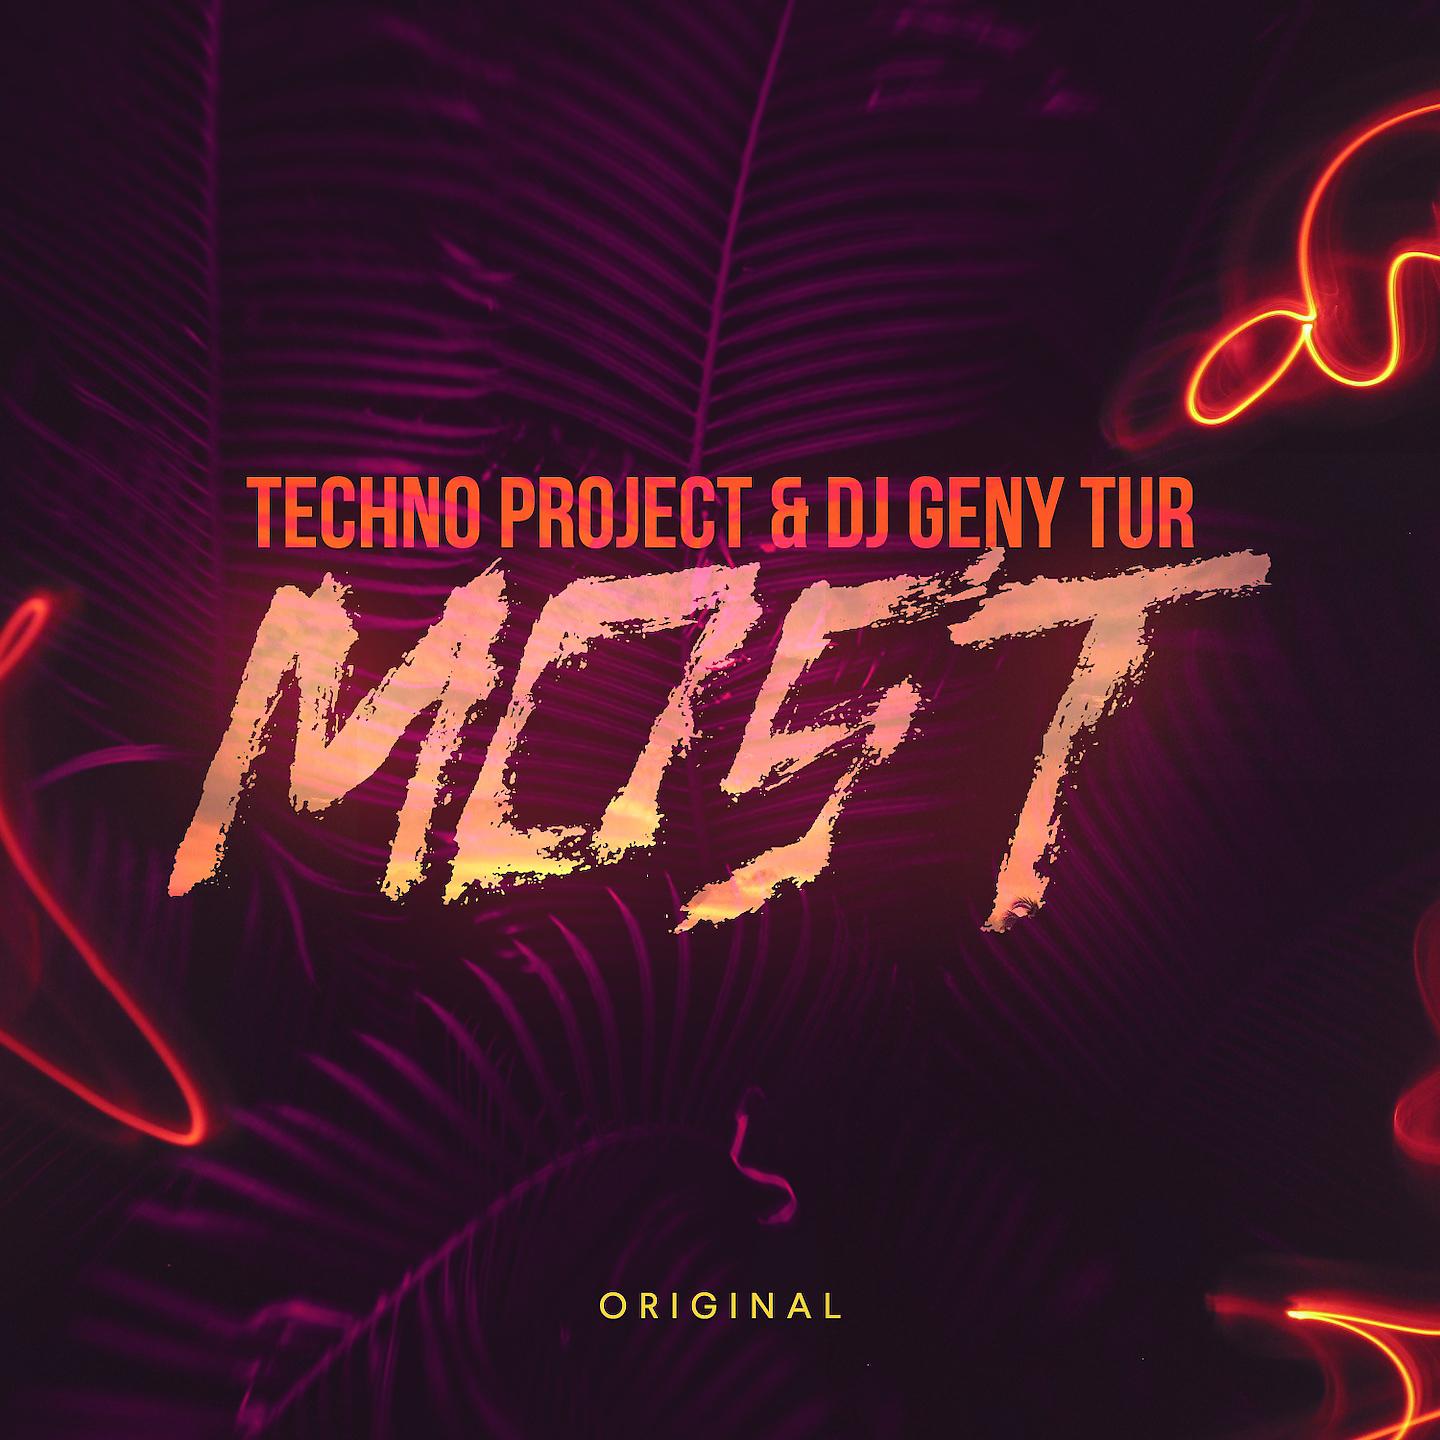 Techno project geny tur. Techno Project. Most Techno Project. Техно Проджект диджей. DJ Geny Tur, Techno Project & Techno Project, DJ Geny Tur.